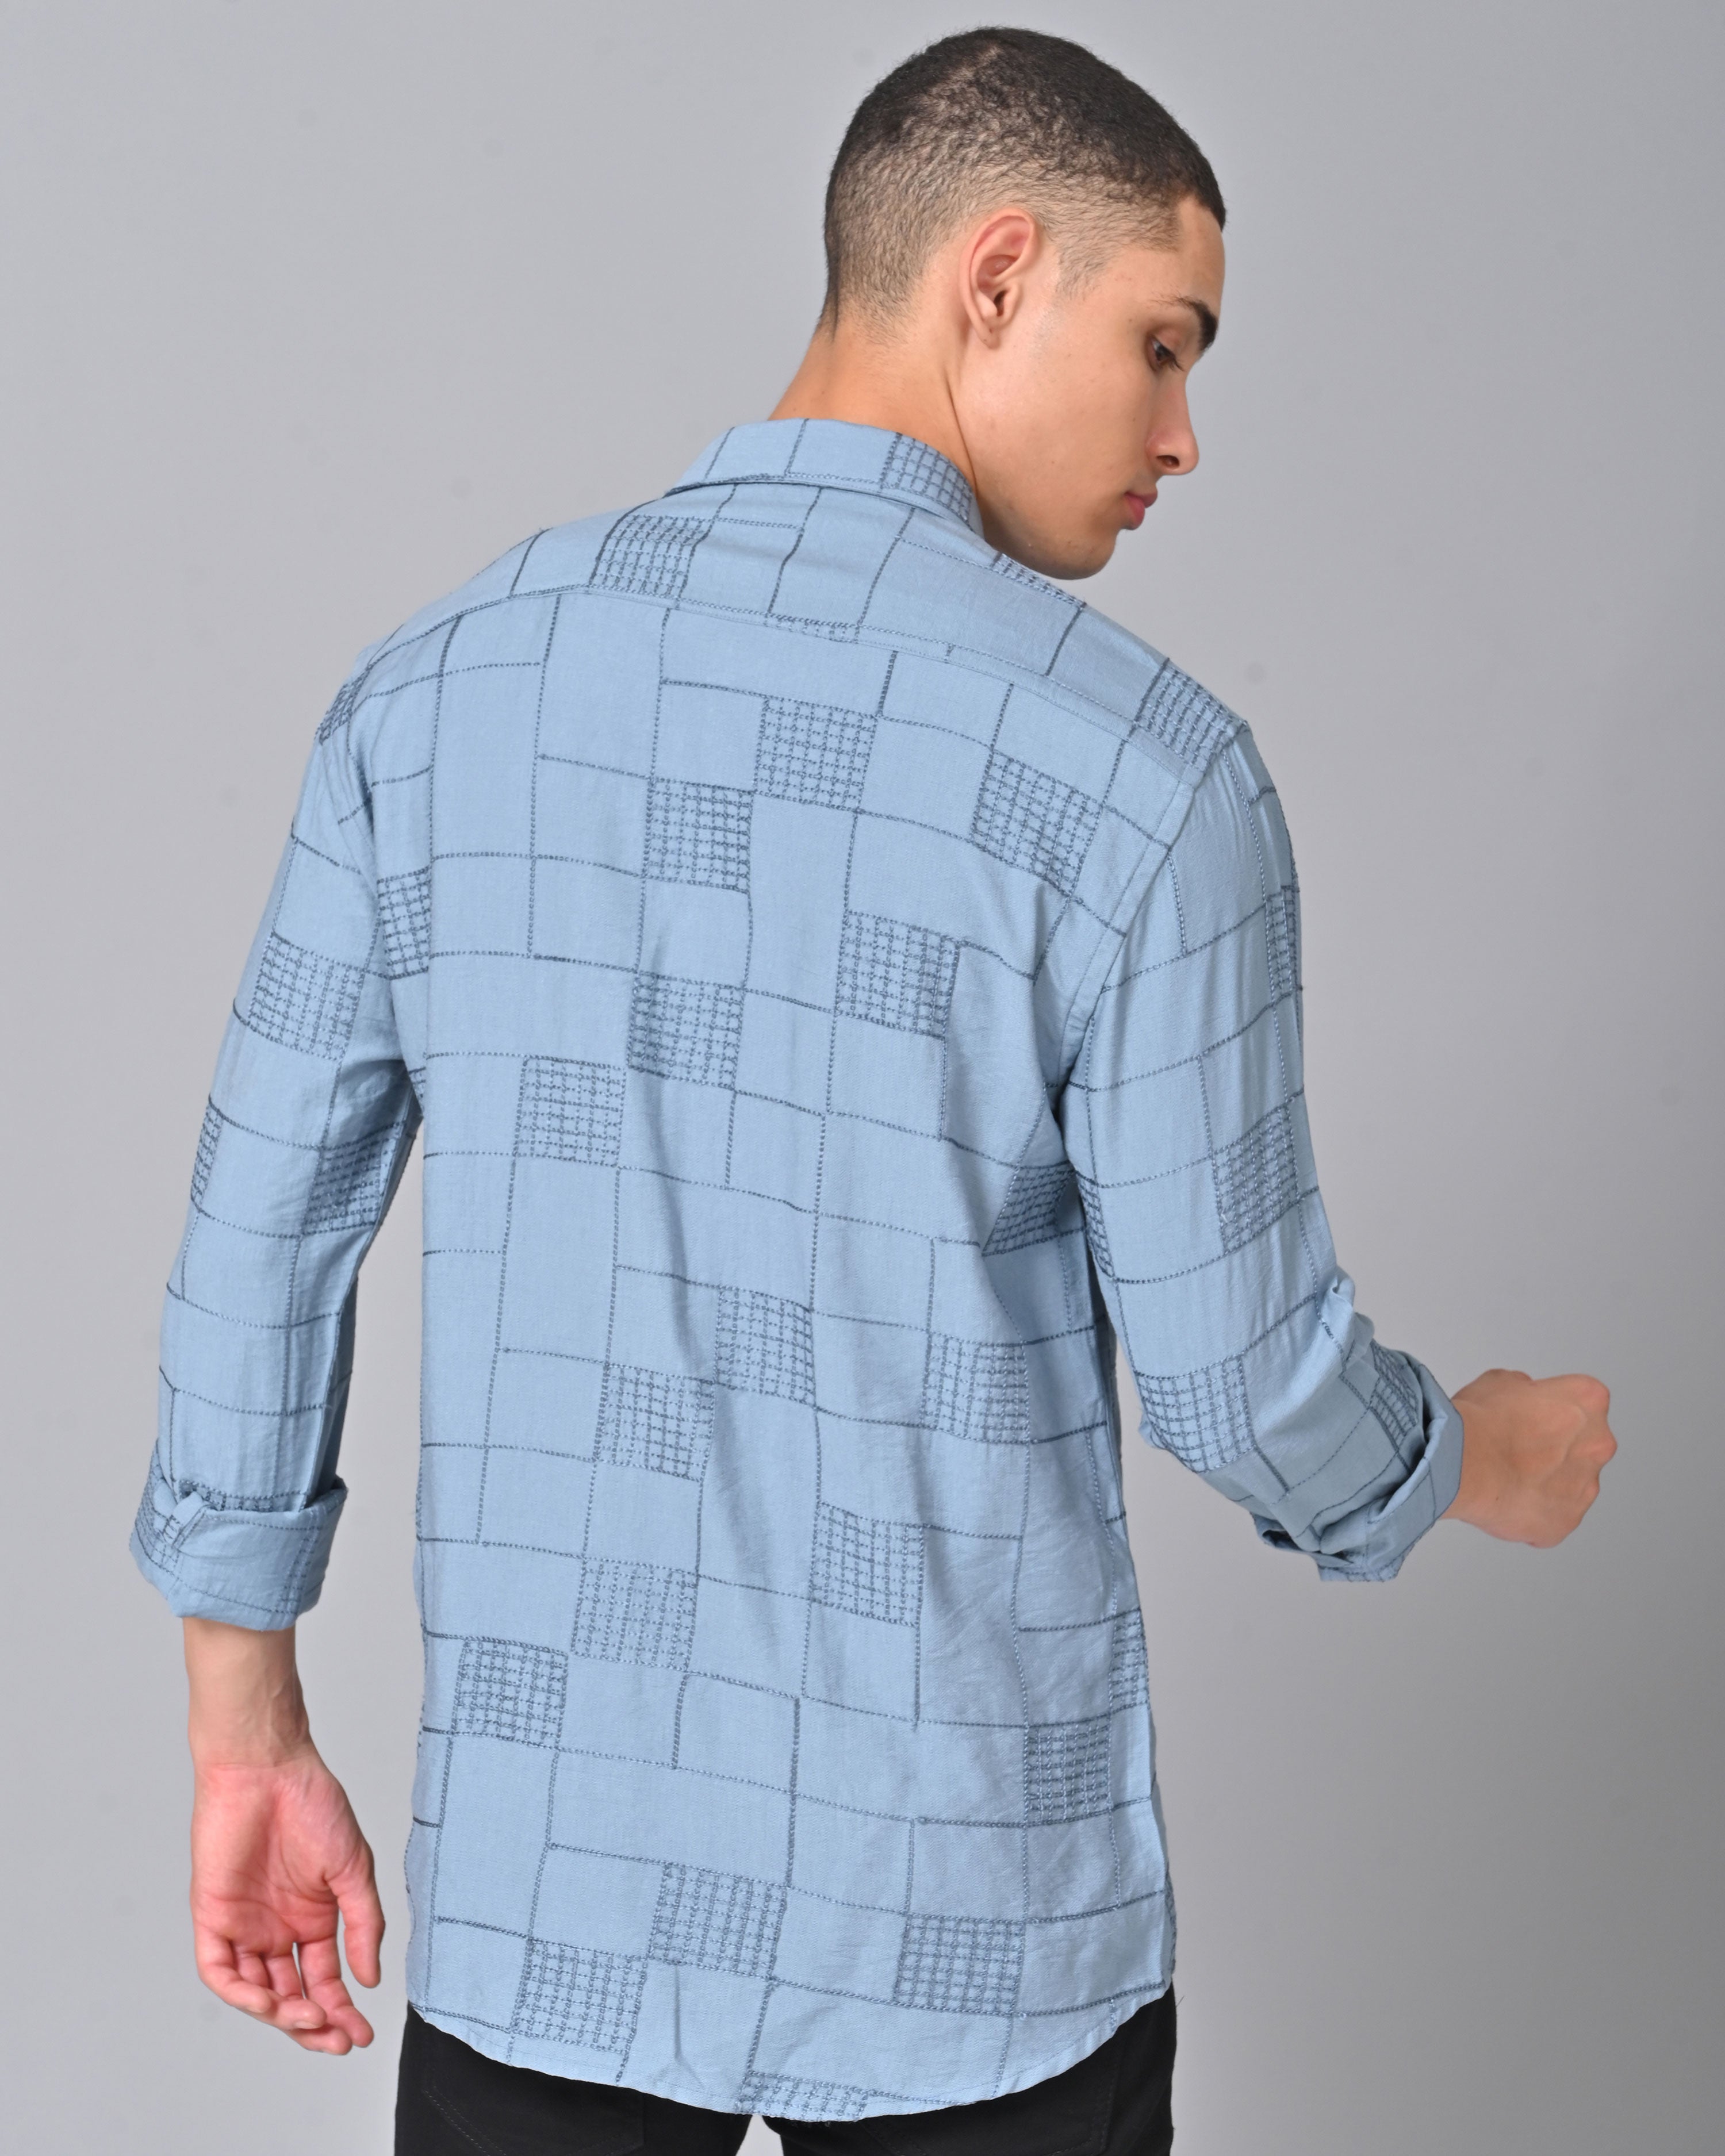 Men's Embroidered Slate Blue Shirt Online